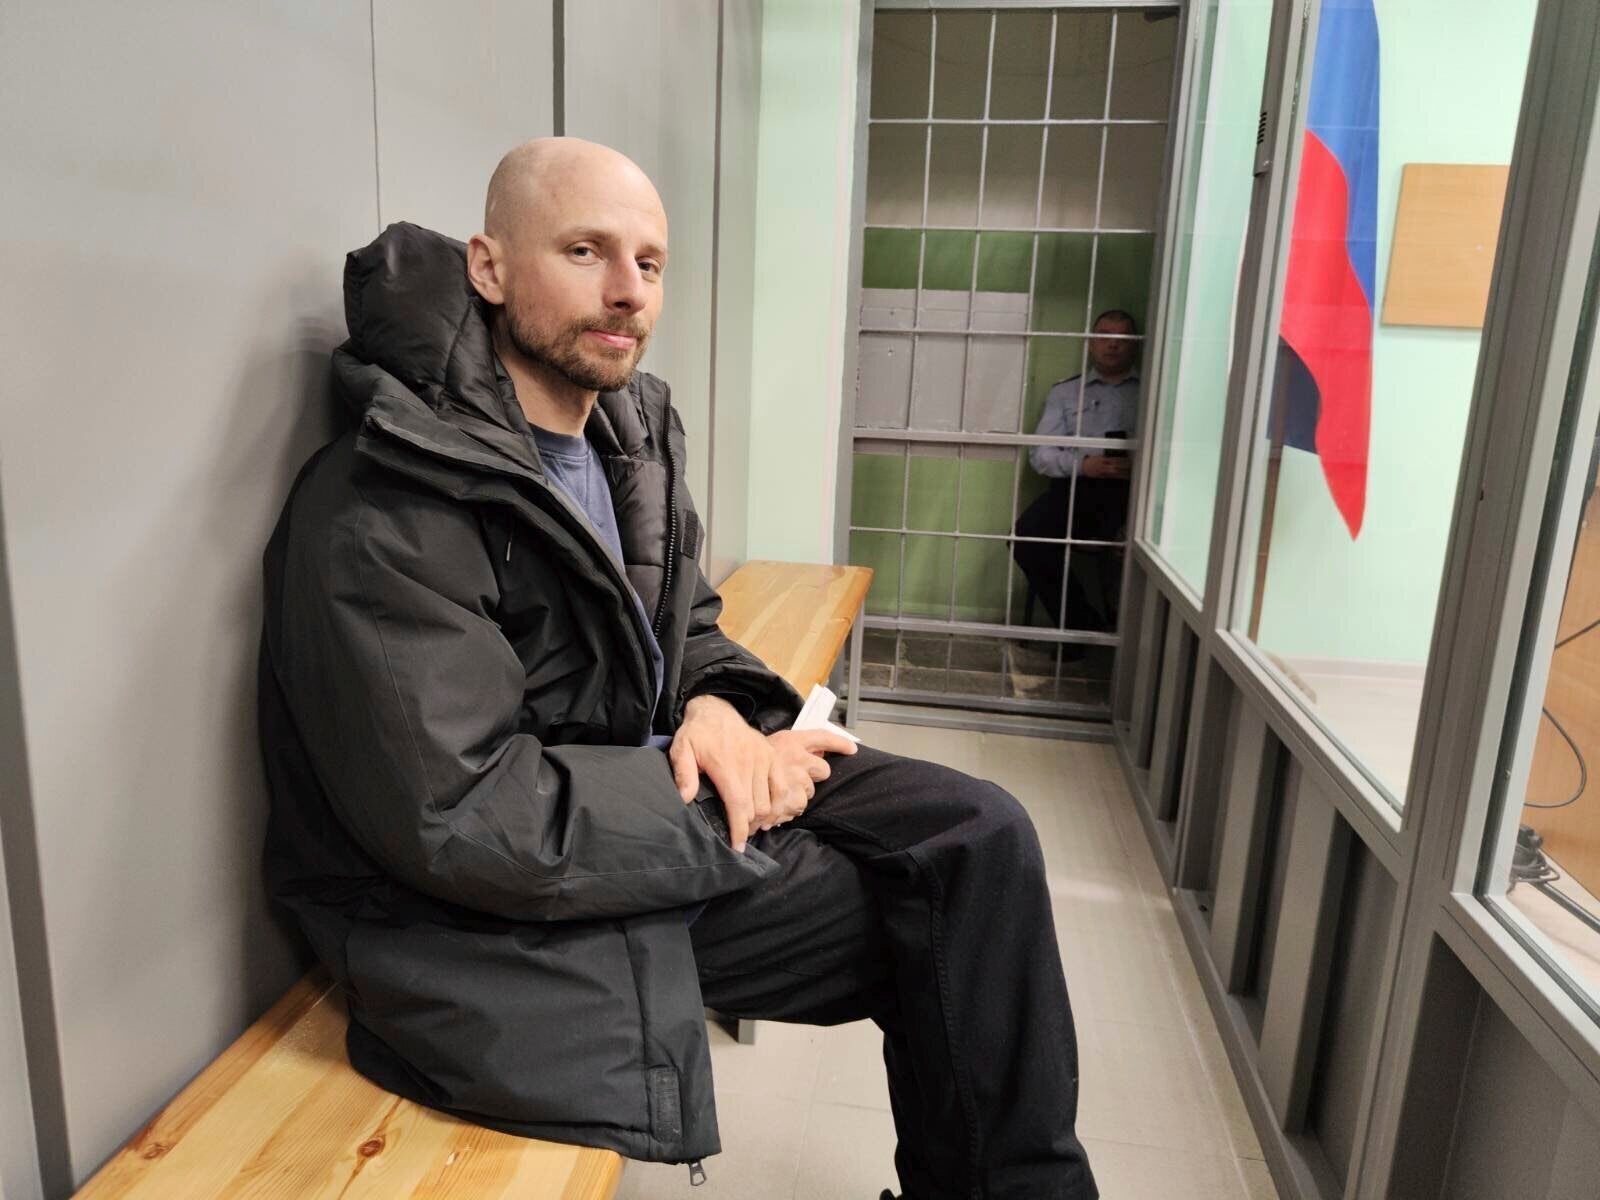 Sergey Karelin appears in court in the Murmansk region of Russia on Saturday